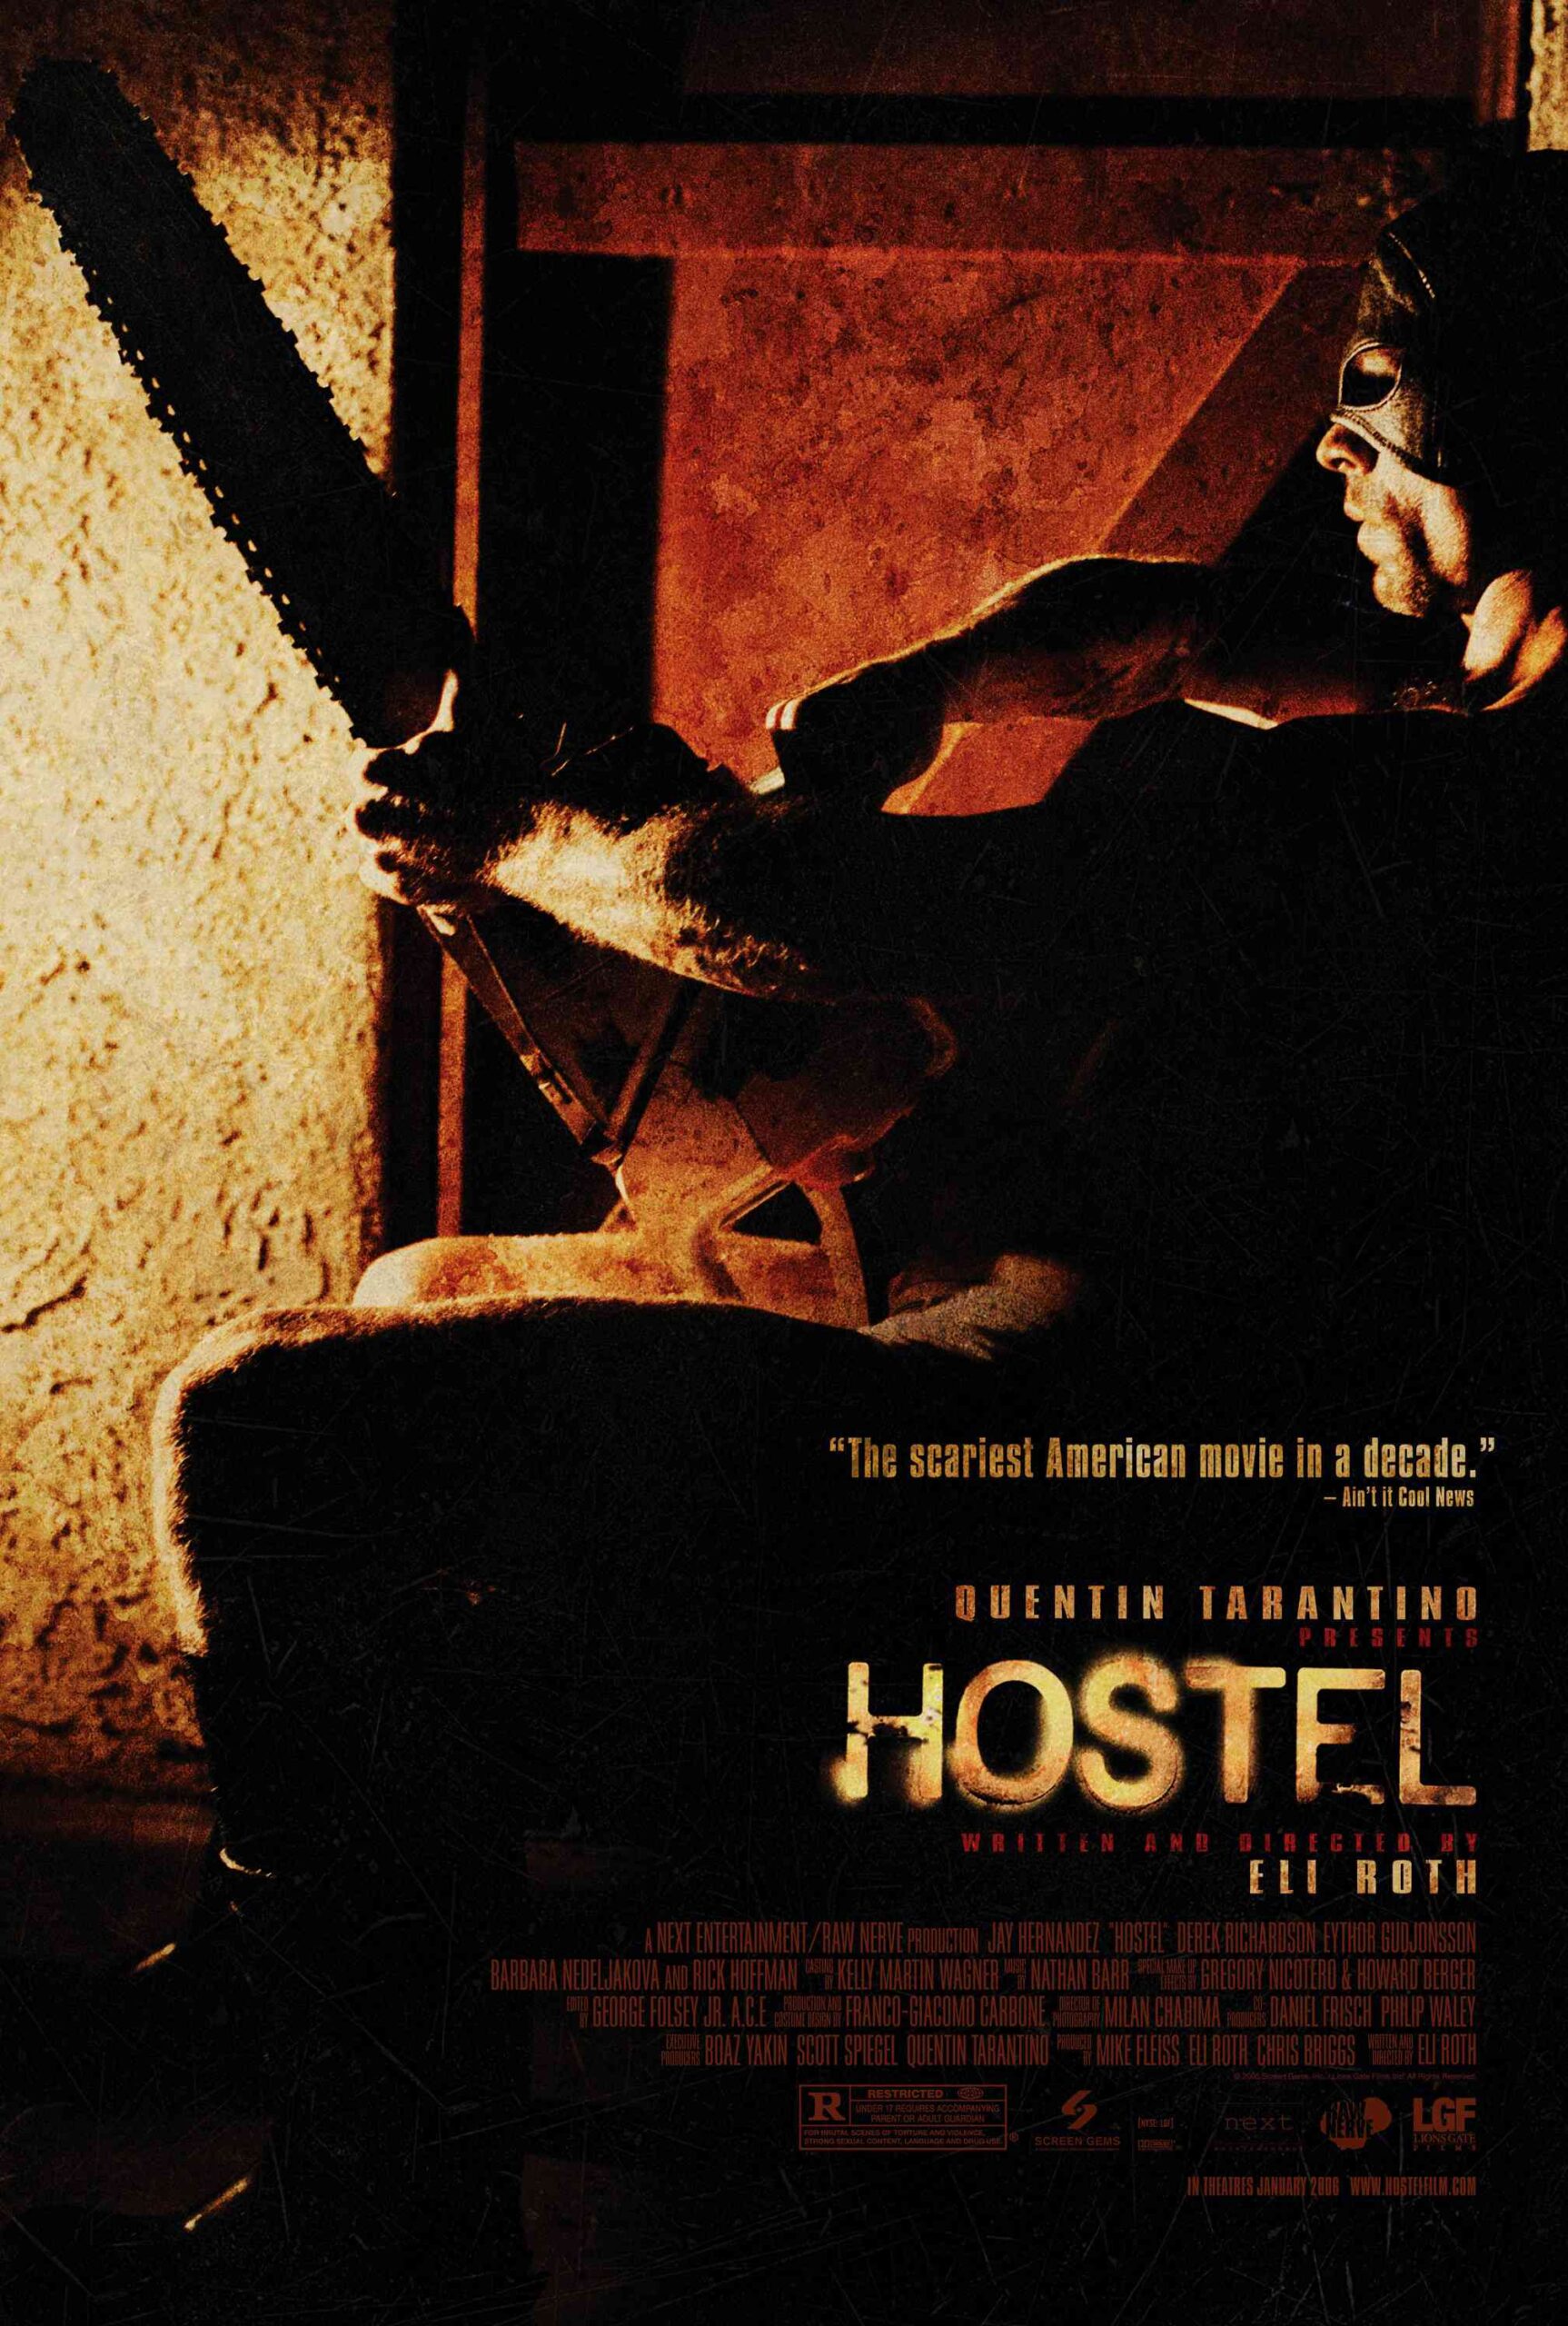 FULL MOVIE: Hostel (2005)